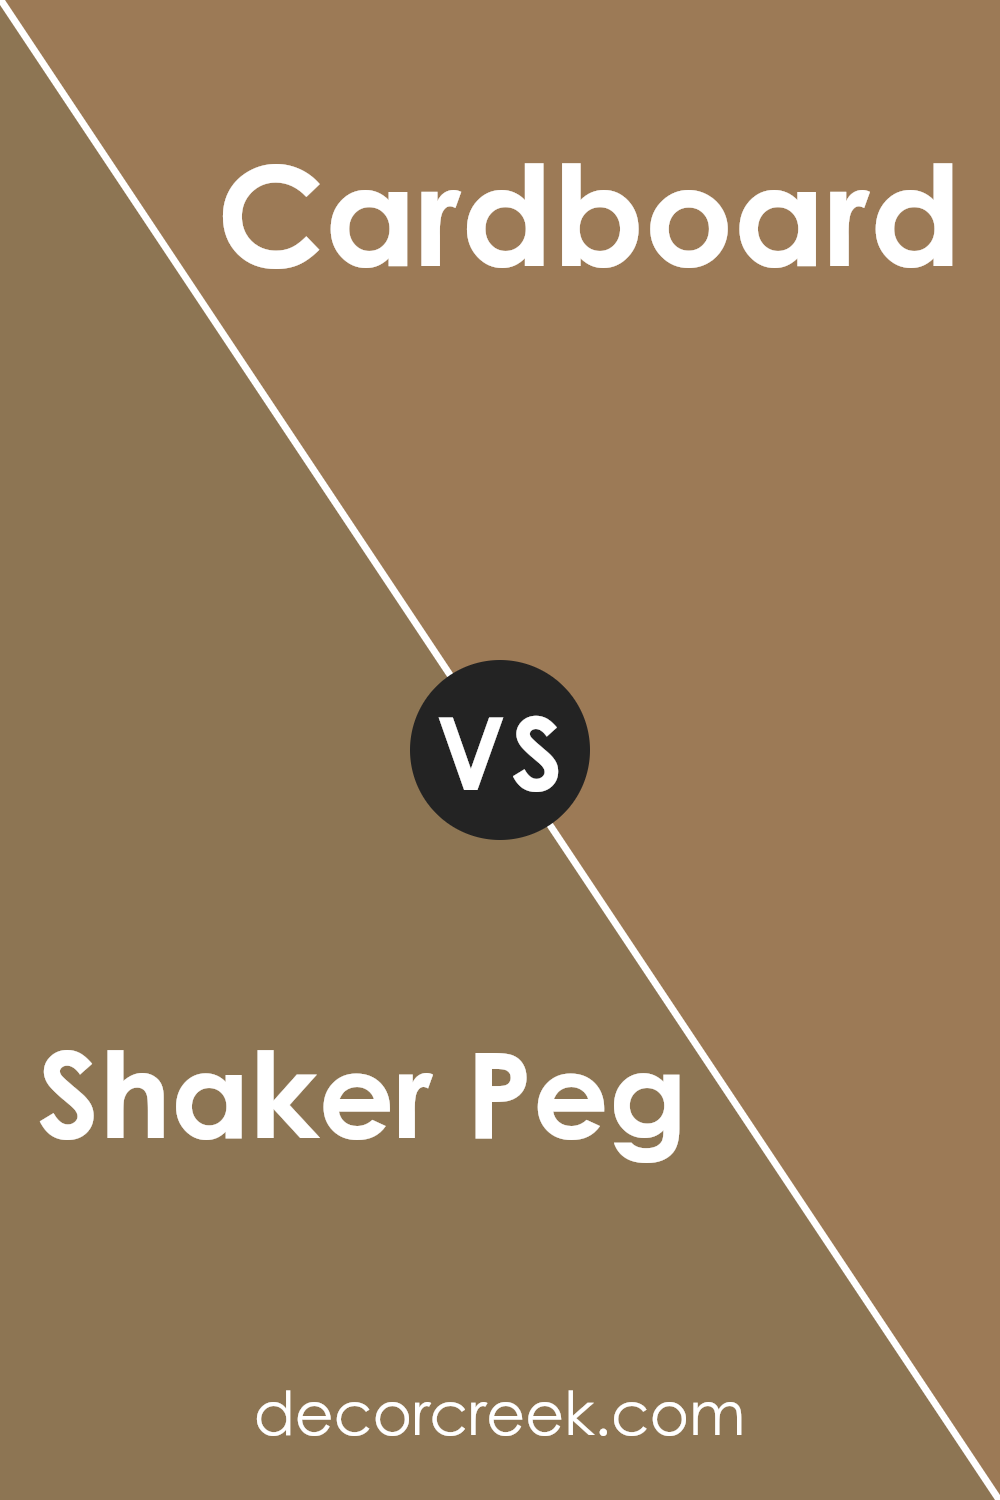 shaker_peg_sw_9539_vs_cardboard_sw_6124